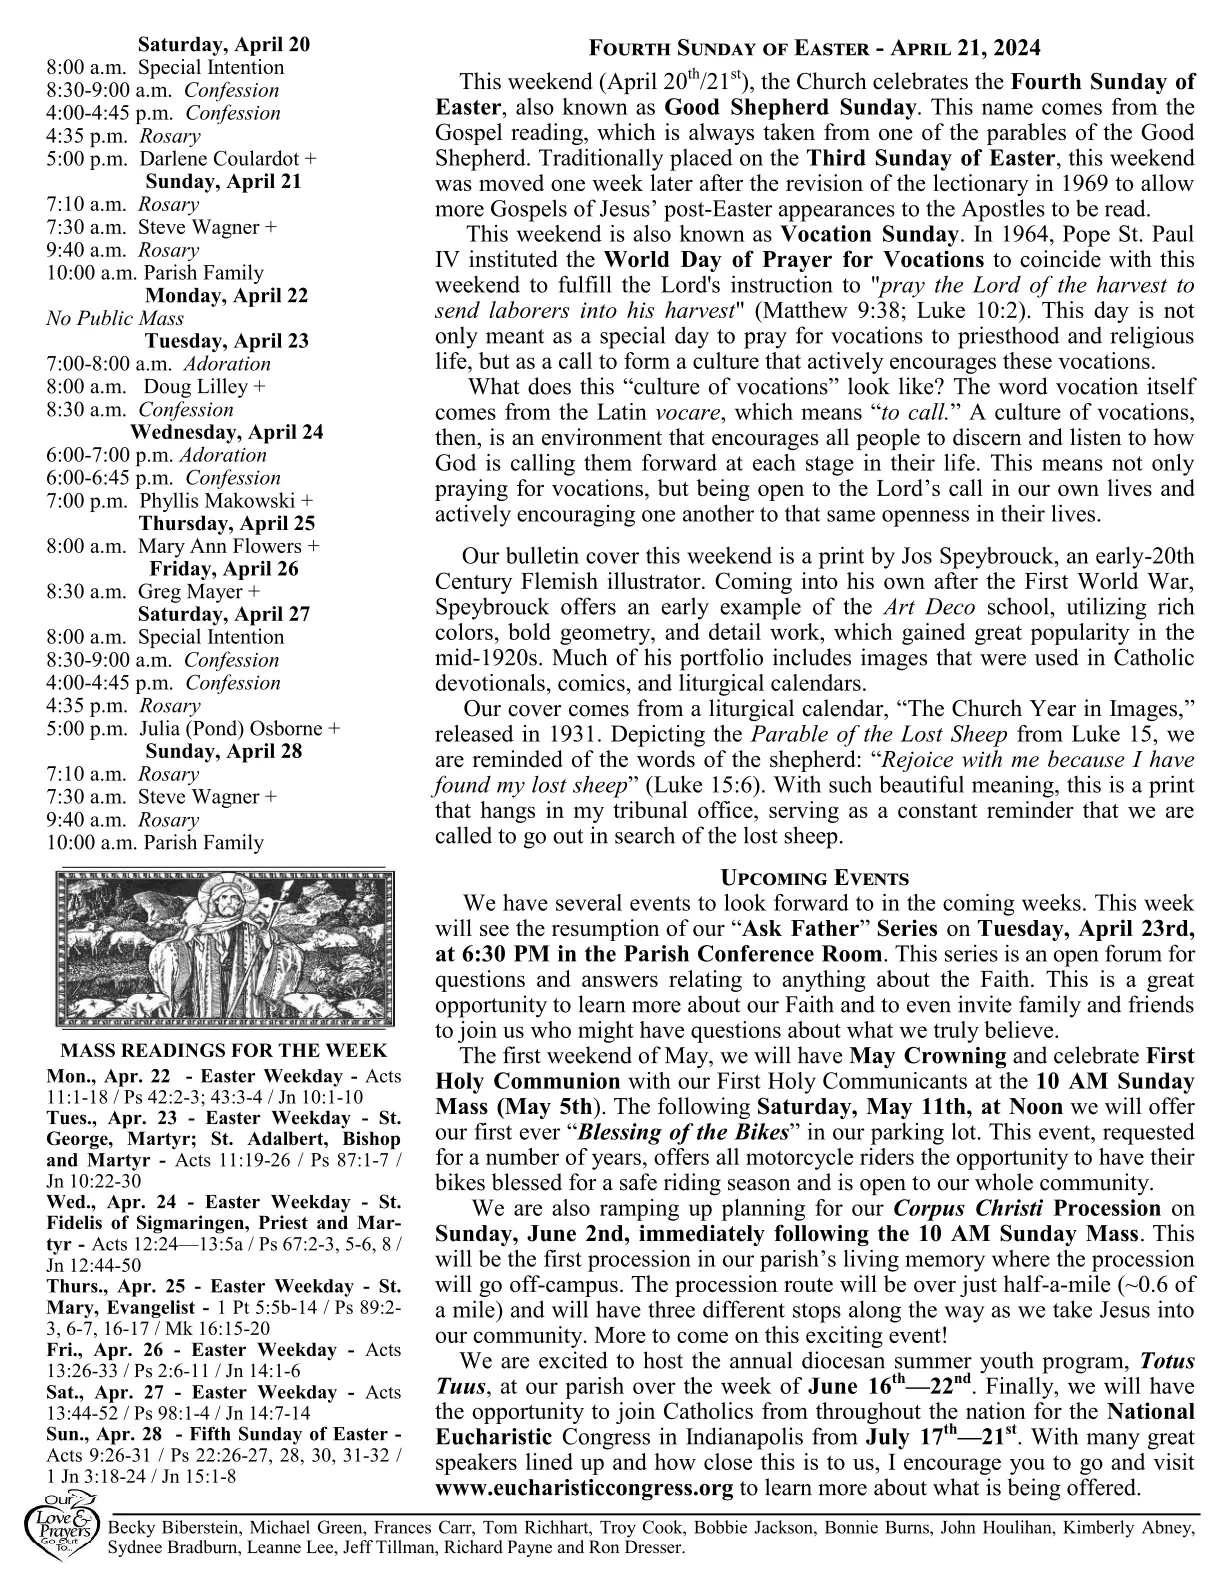 Apr 21, 2024 - Bulletin - Page 2